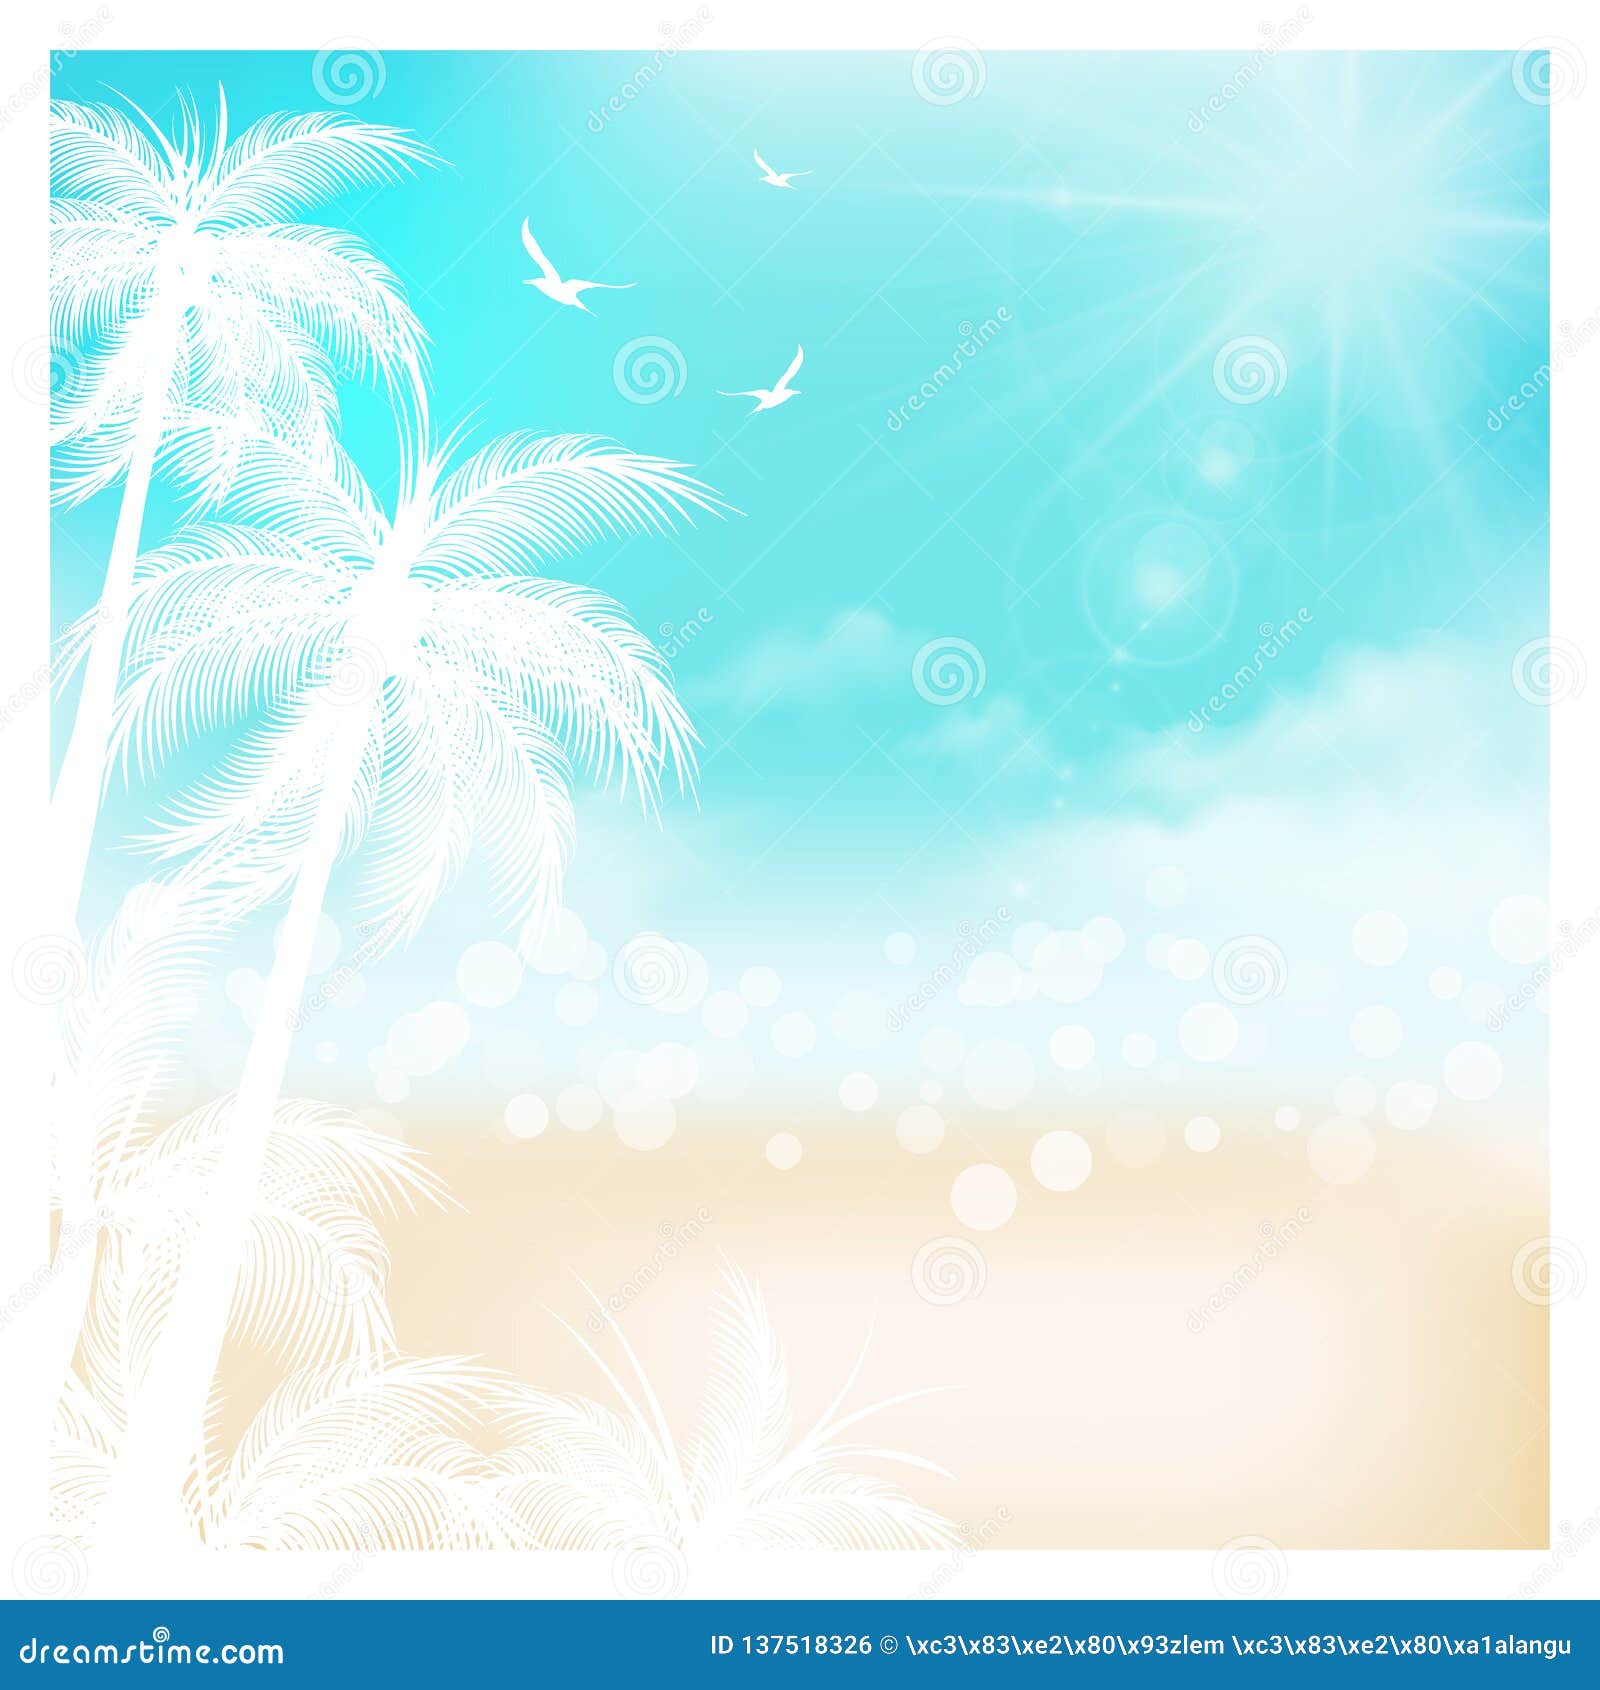 Summer Background, Summer Time, Summer Holiday Concept Vector Illustration  Stock Vector - Illustration of paradise, island: 137518326